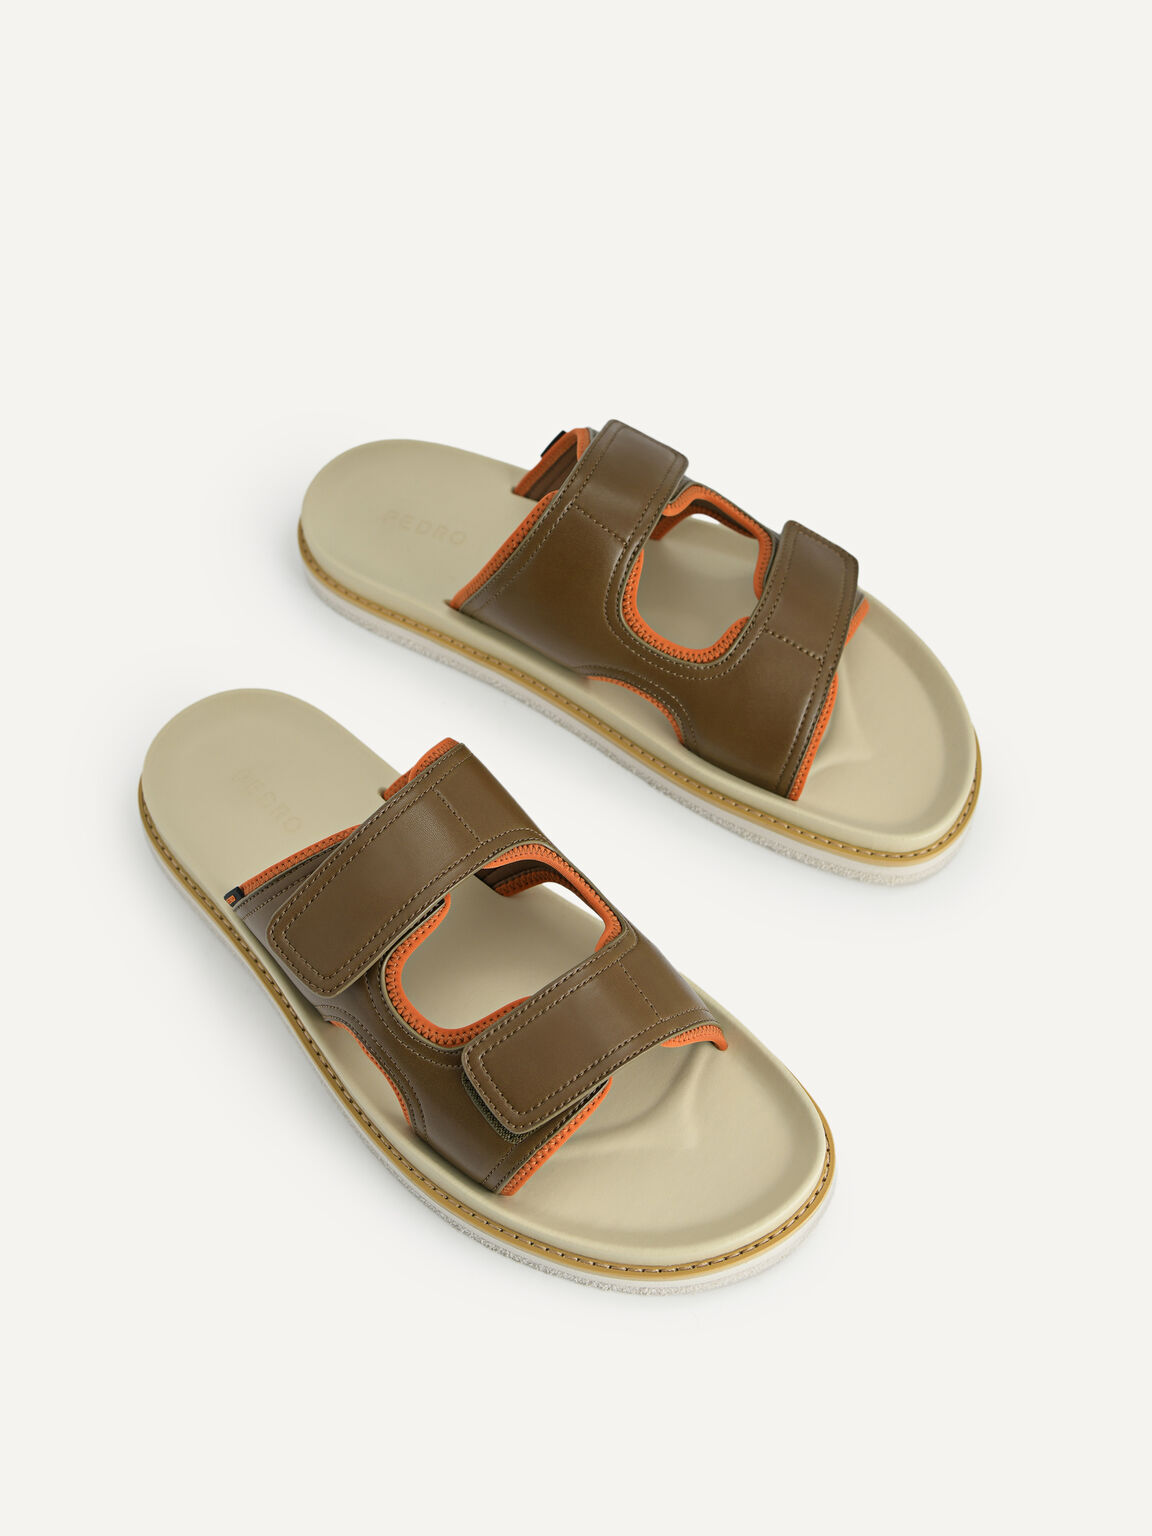 Double Strap Sandals, Olive, hi-res